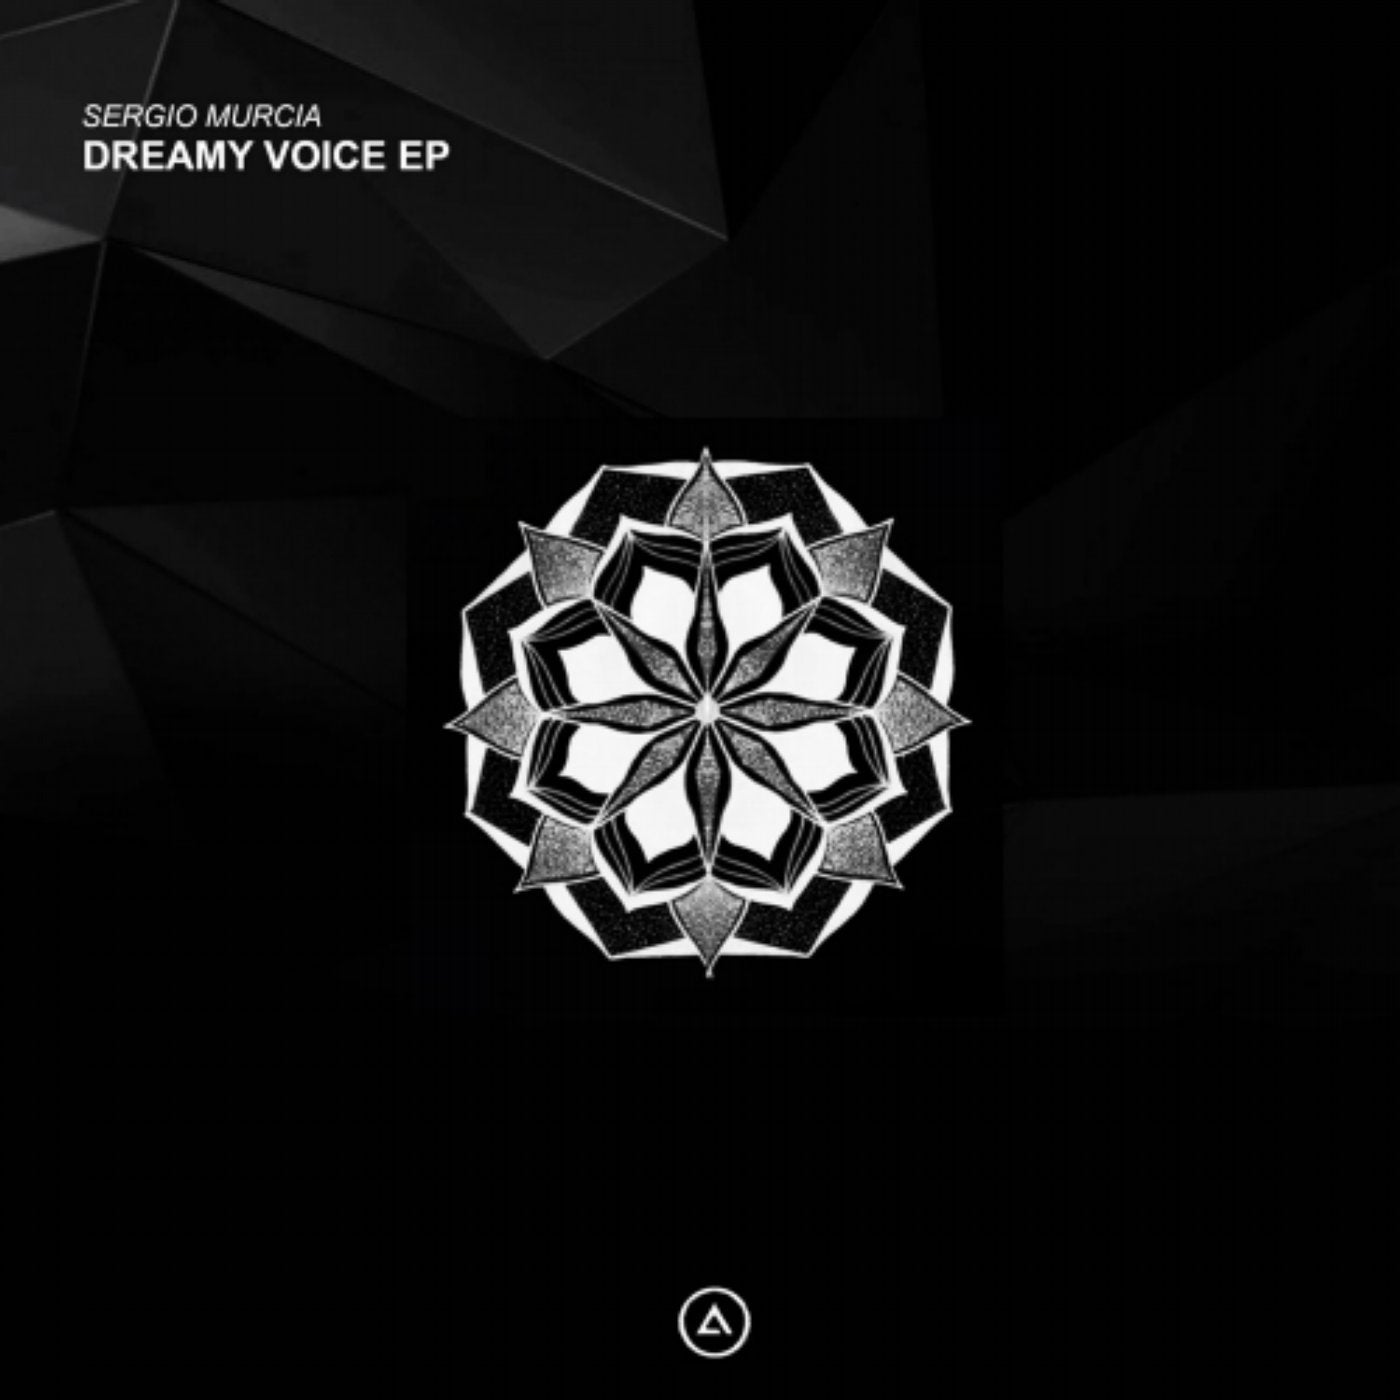 Dreamy Voice EP